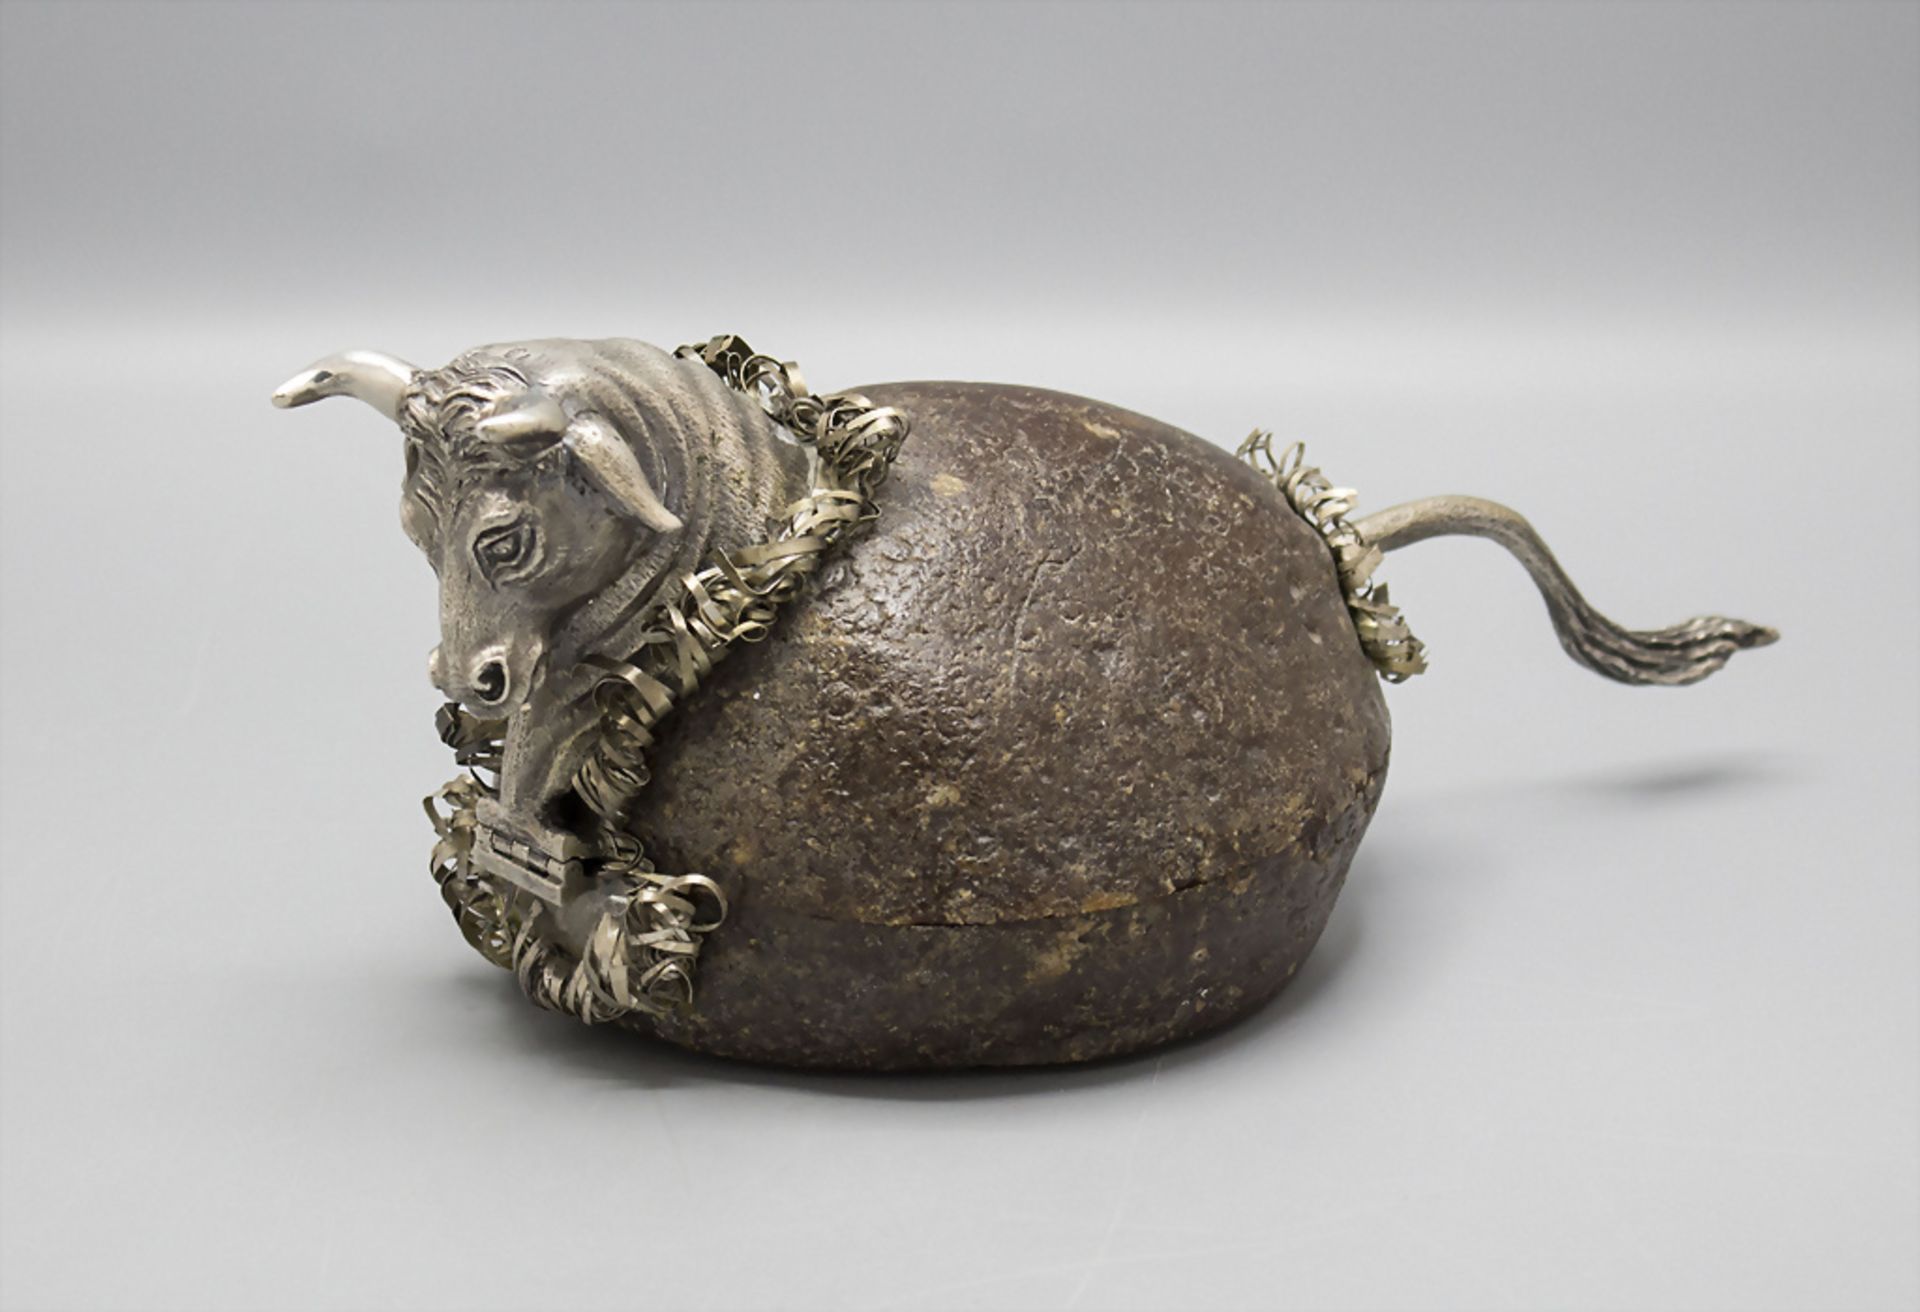 Achat- und Silberskluptur 'Stier' / An agate and silver sculpture of a bull, wohl Gabriele De ...